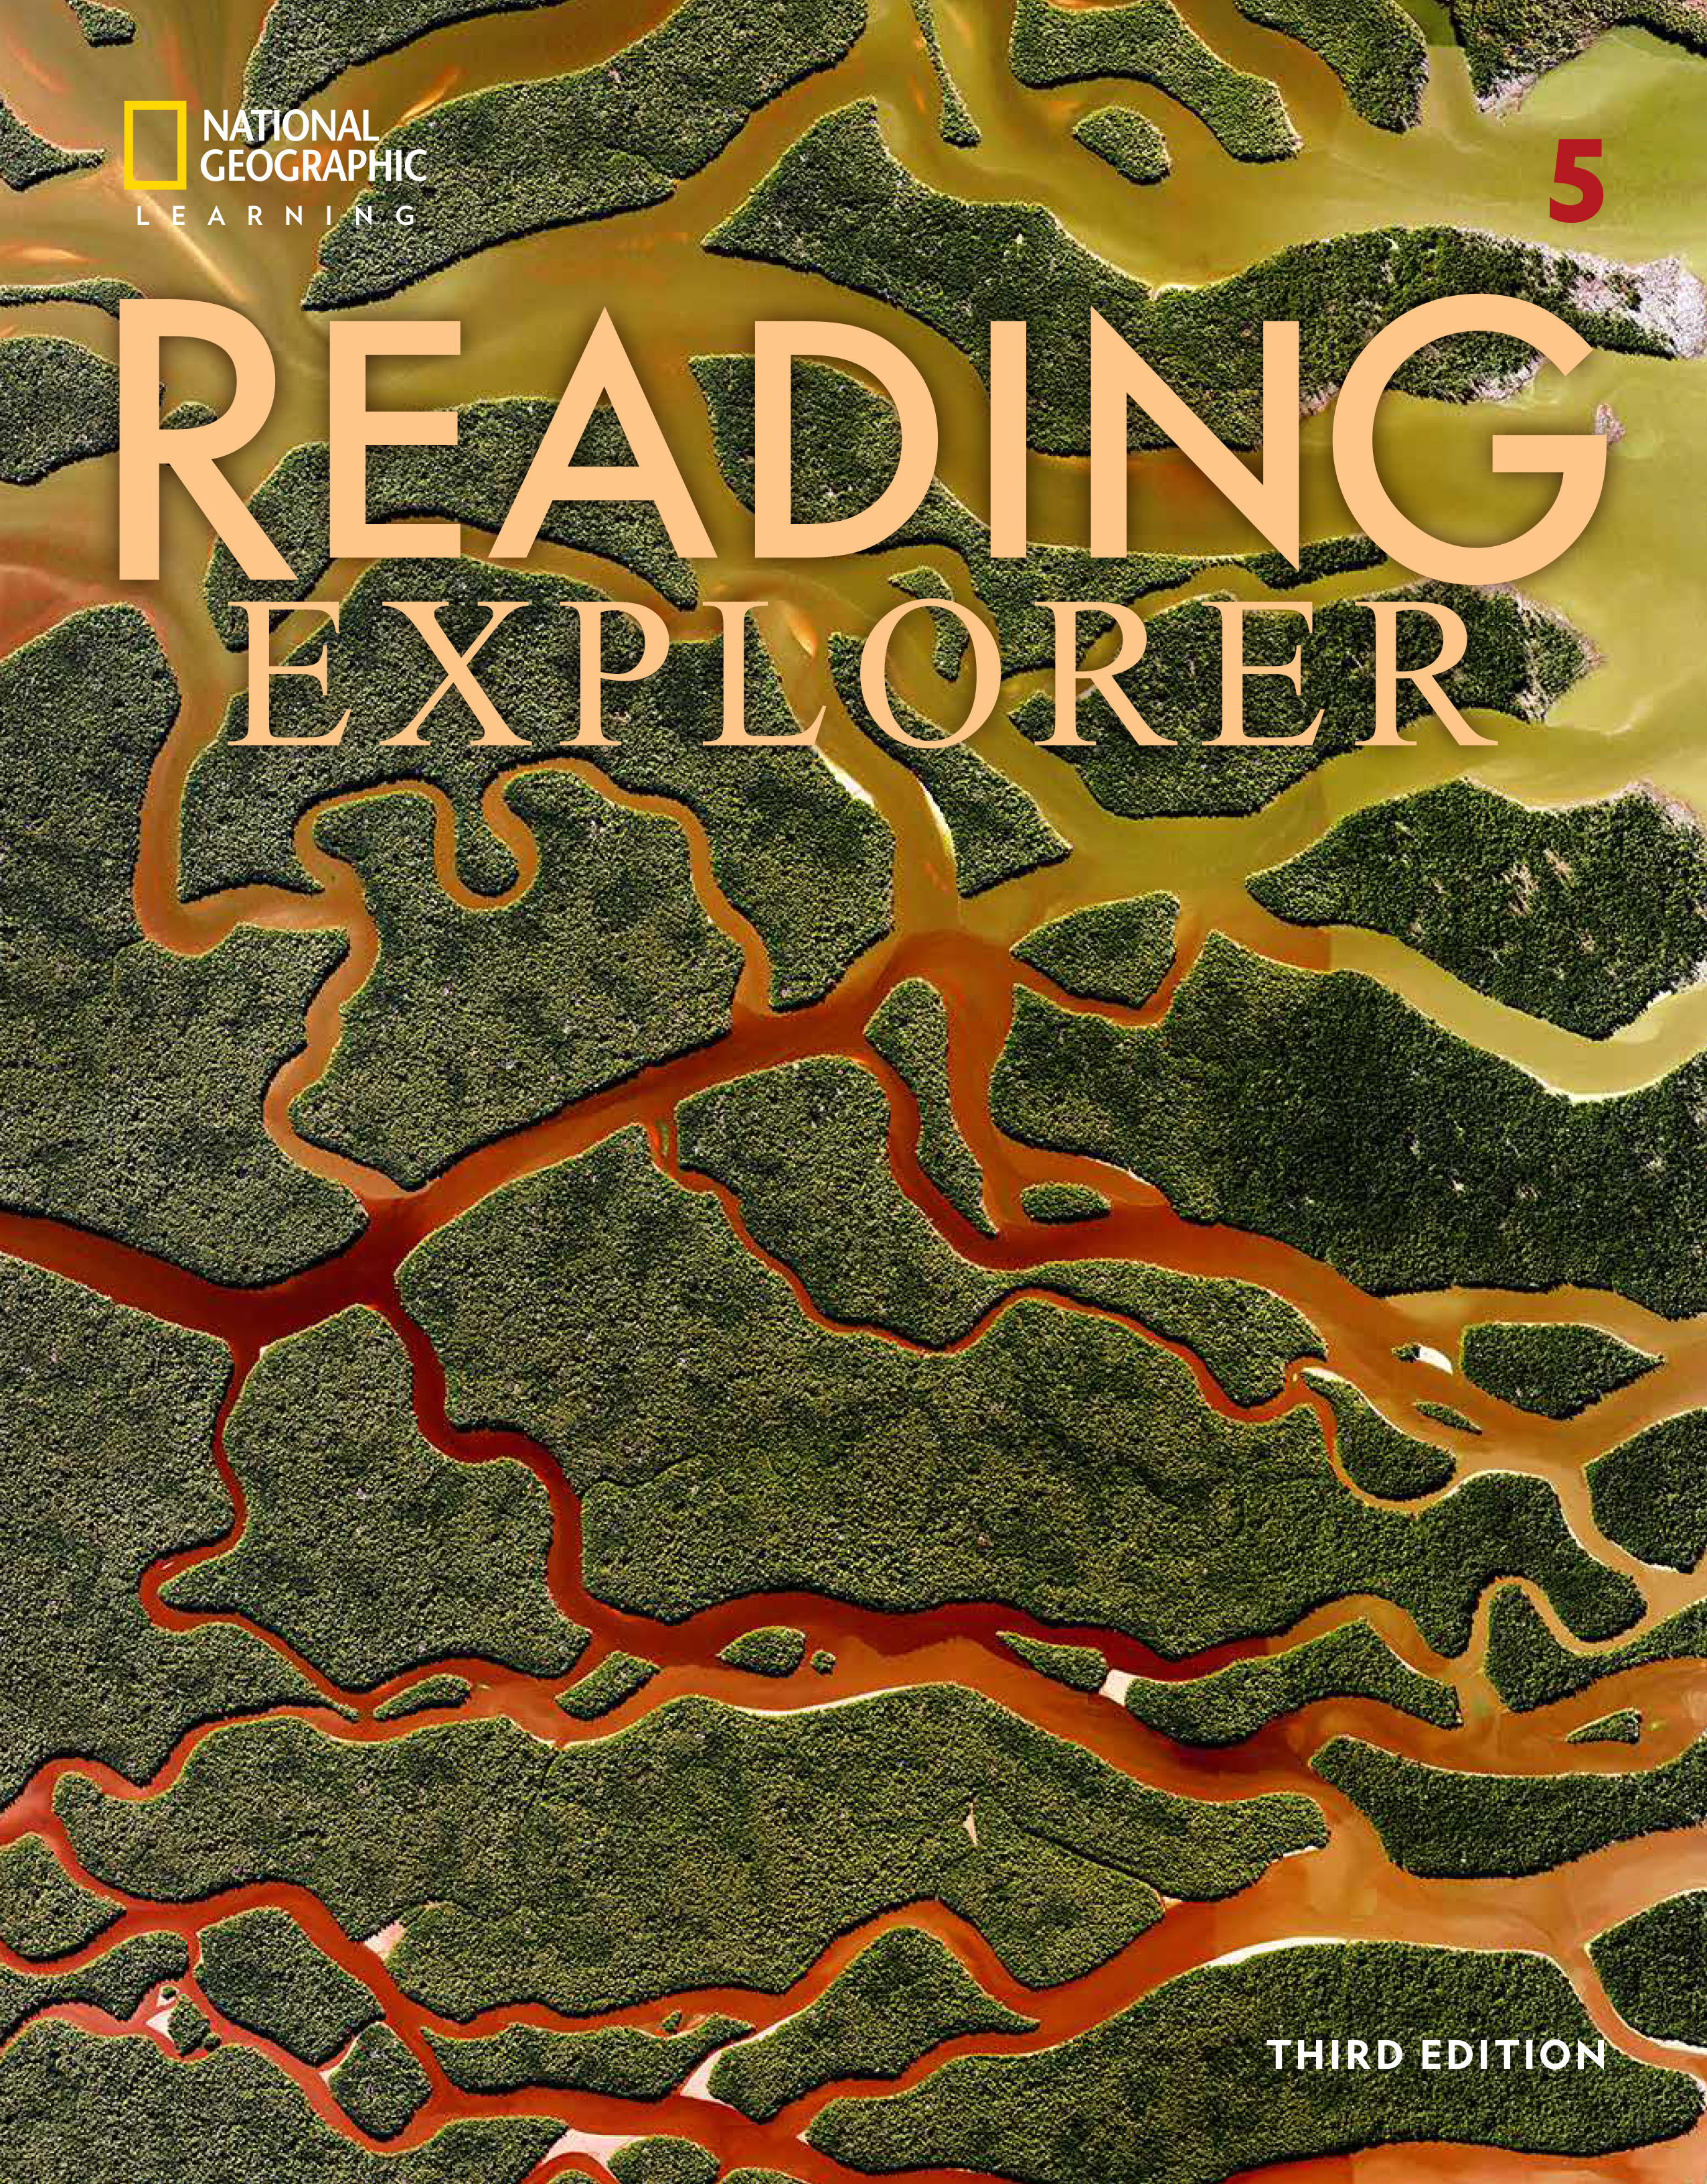 Reading explorer 3/E 5 SB + Online WB sticker code